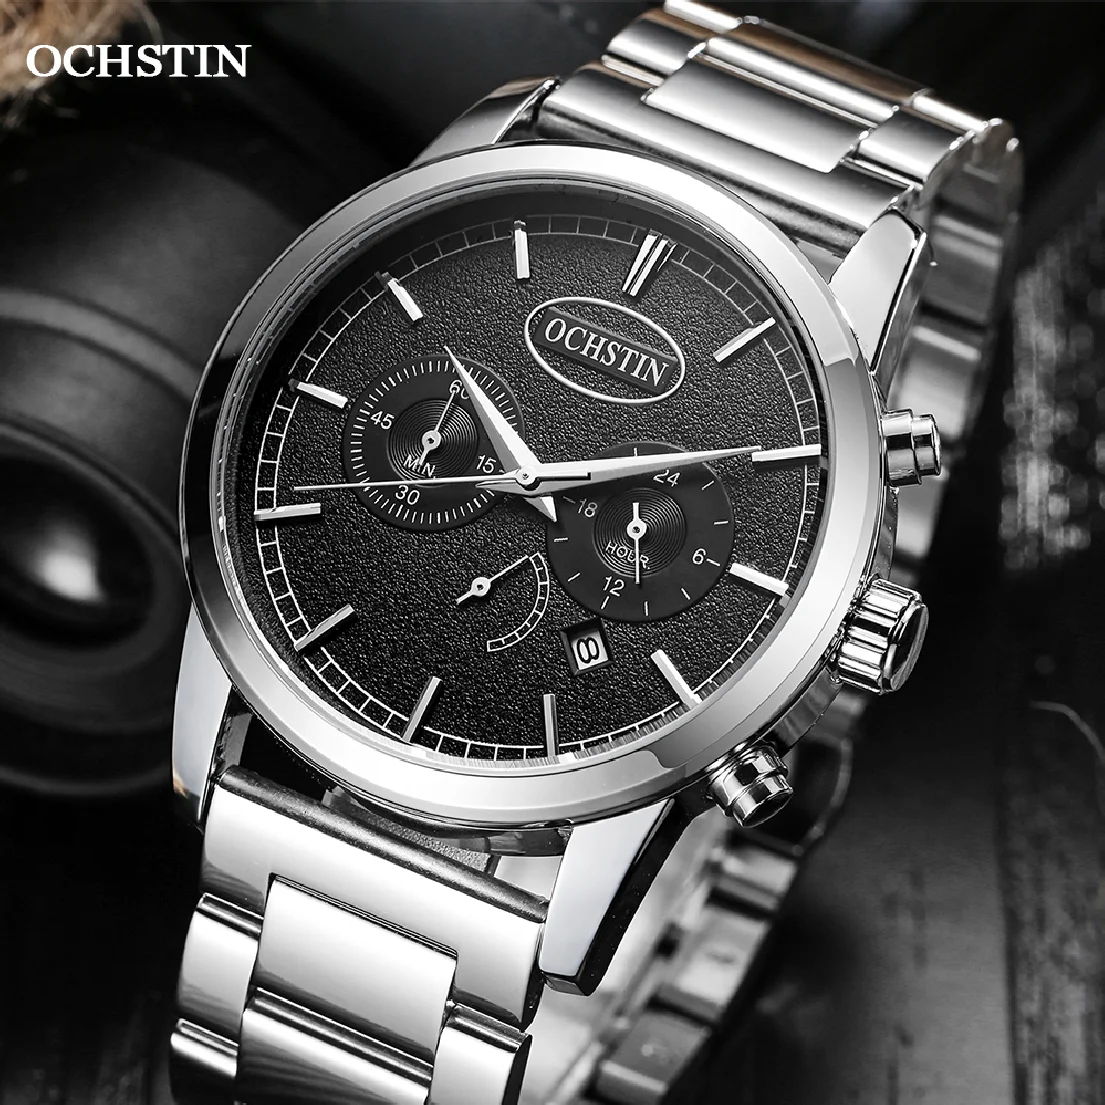 

��ѧ�� �ާ��ا�ܧڧ� �ߧѧ���ߧ�� 2021 Pilot Watches Quartz Chronograph Clock OCHSTIN Top Brand Luxury Stainless Steel Wristwatch GQ067D